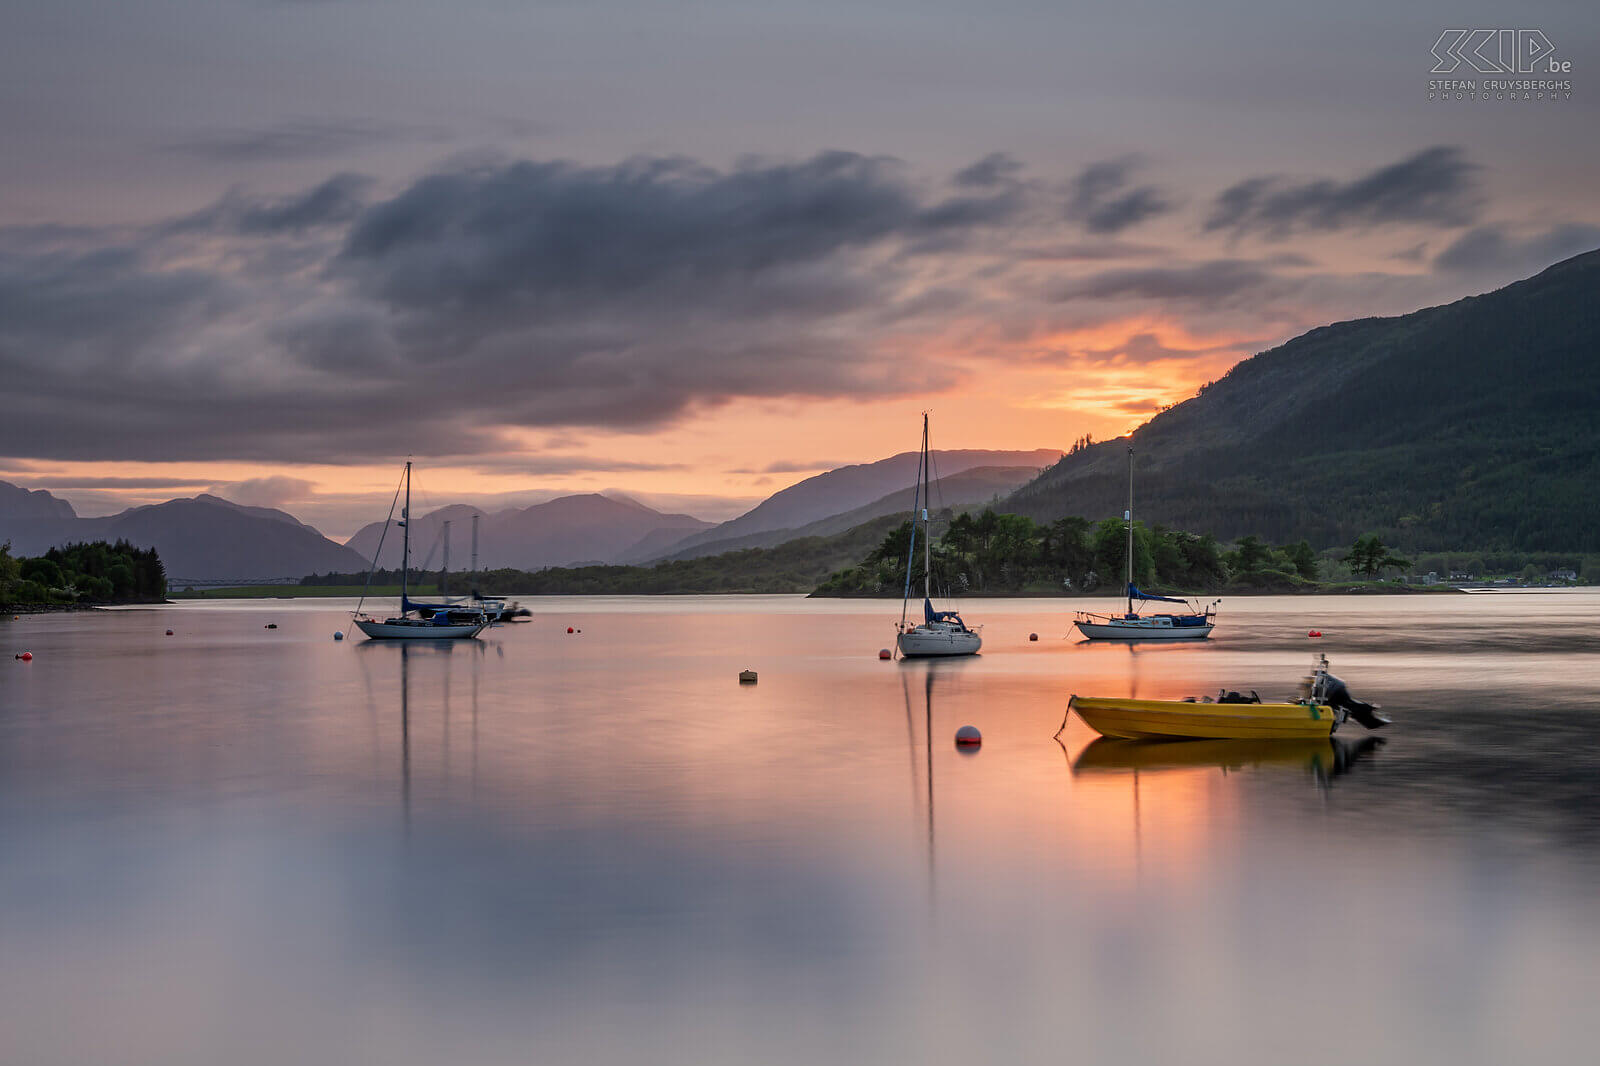 Loch Leven - Sunset Sunset at the small marina of Loch Linhe near Ballachulish and Glencoe. Stefan Cruysberghs